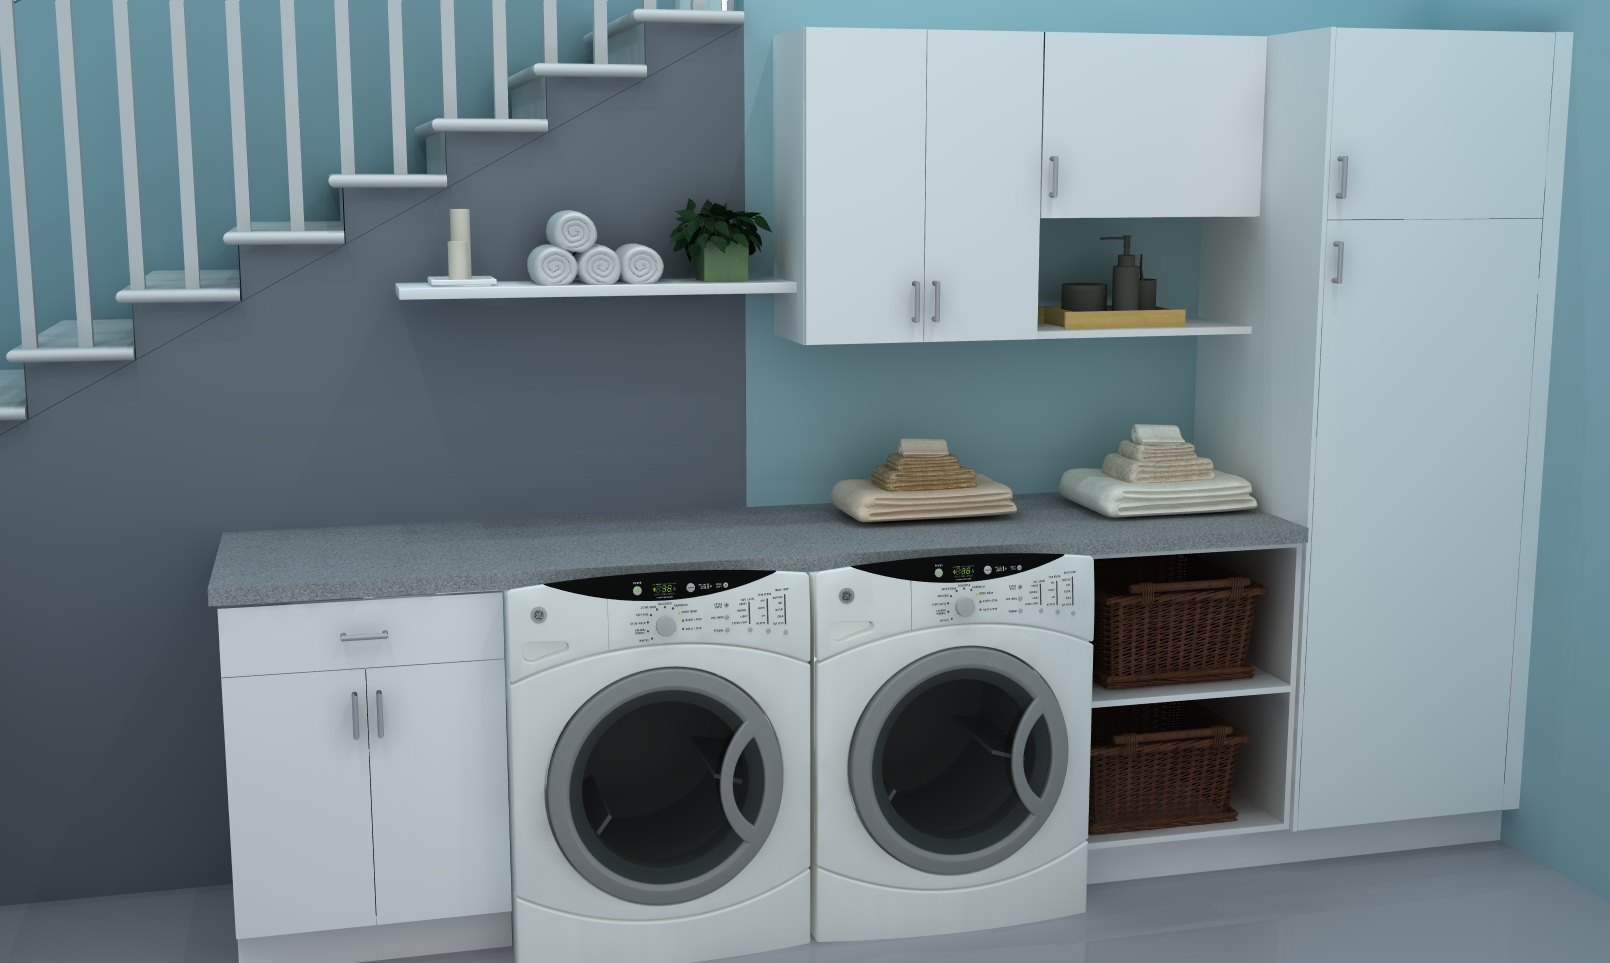 Laundry Room Hamper Cabinet - Bing images